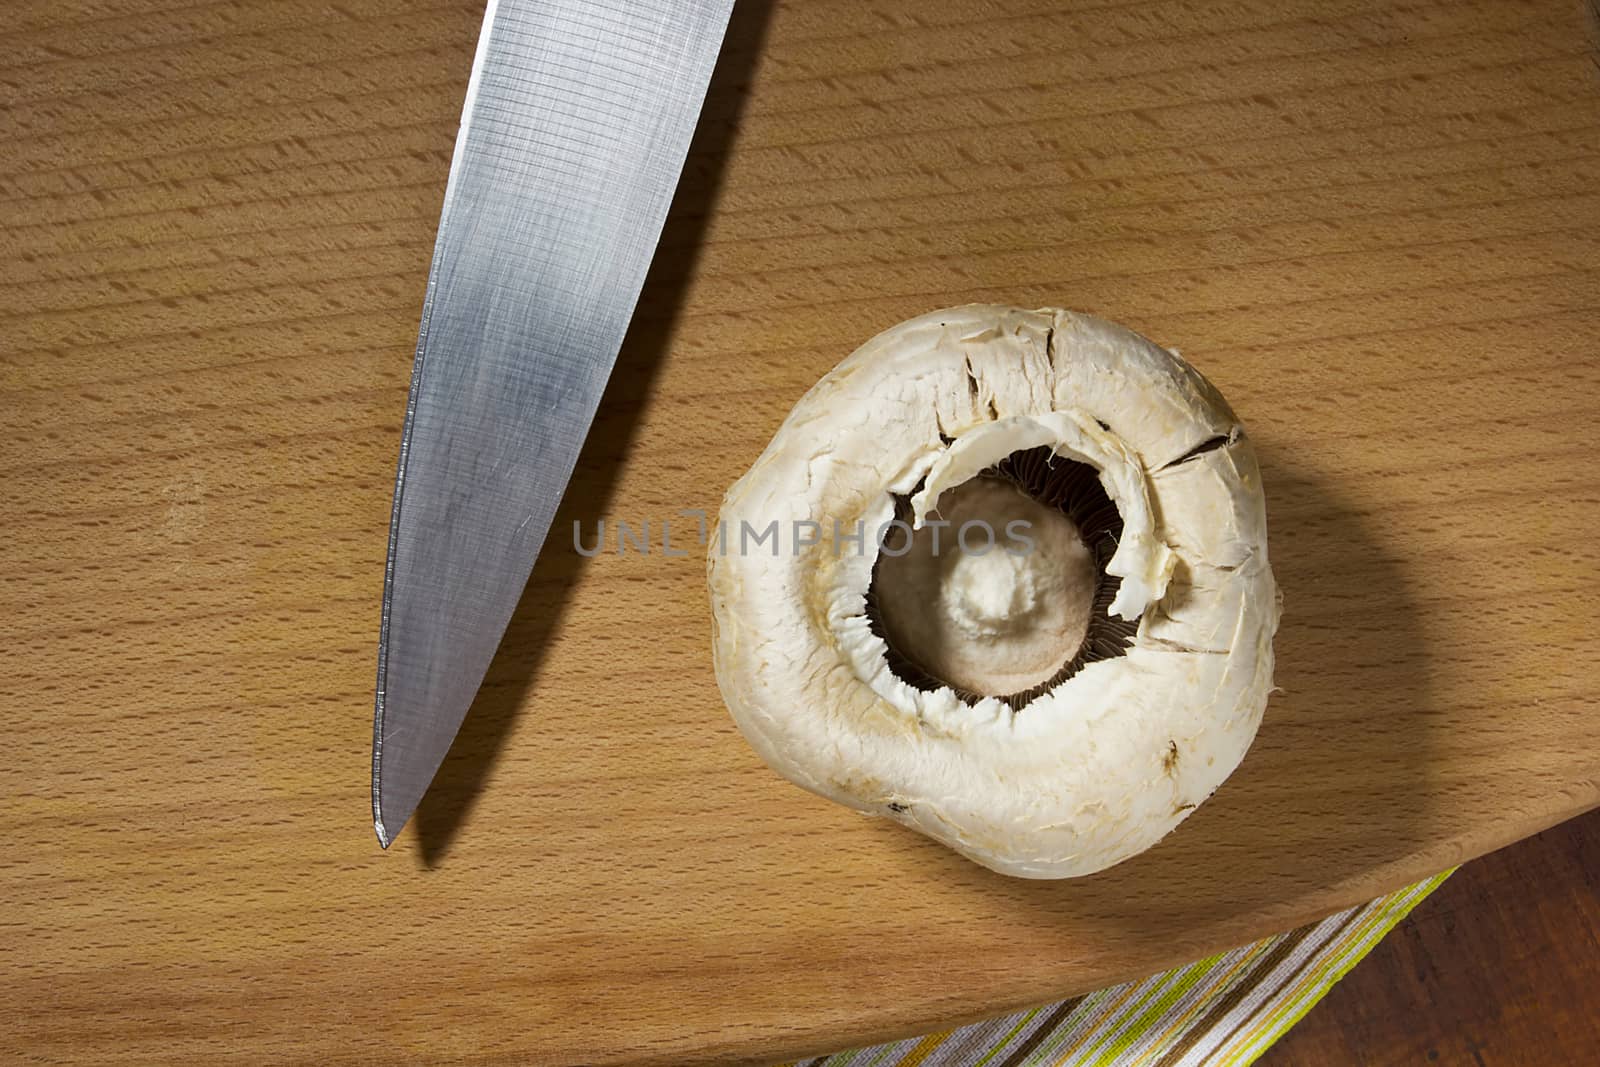 Raw champignon mushroom cap and knife on wooden cutting board